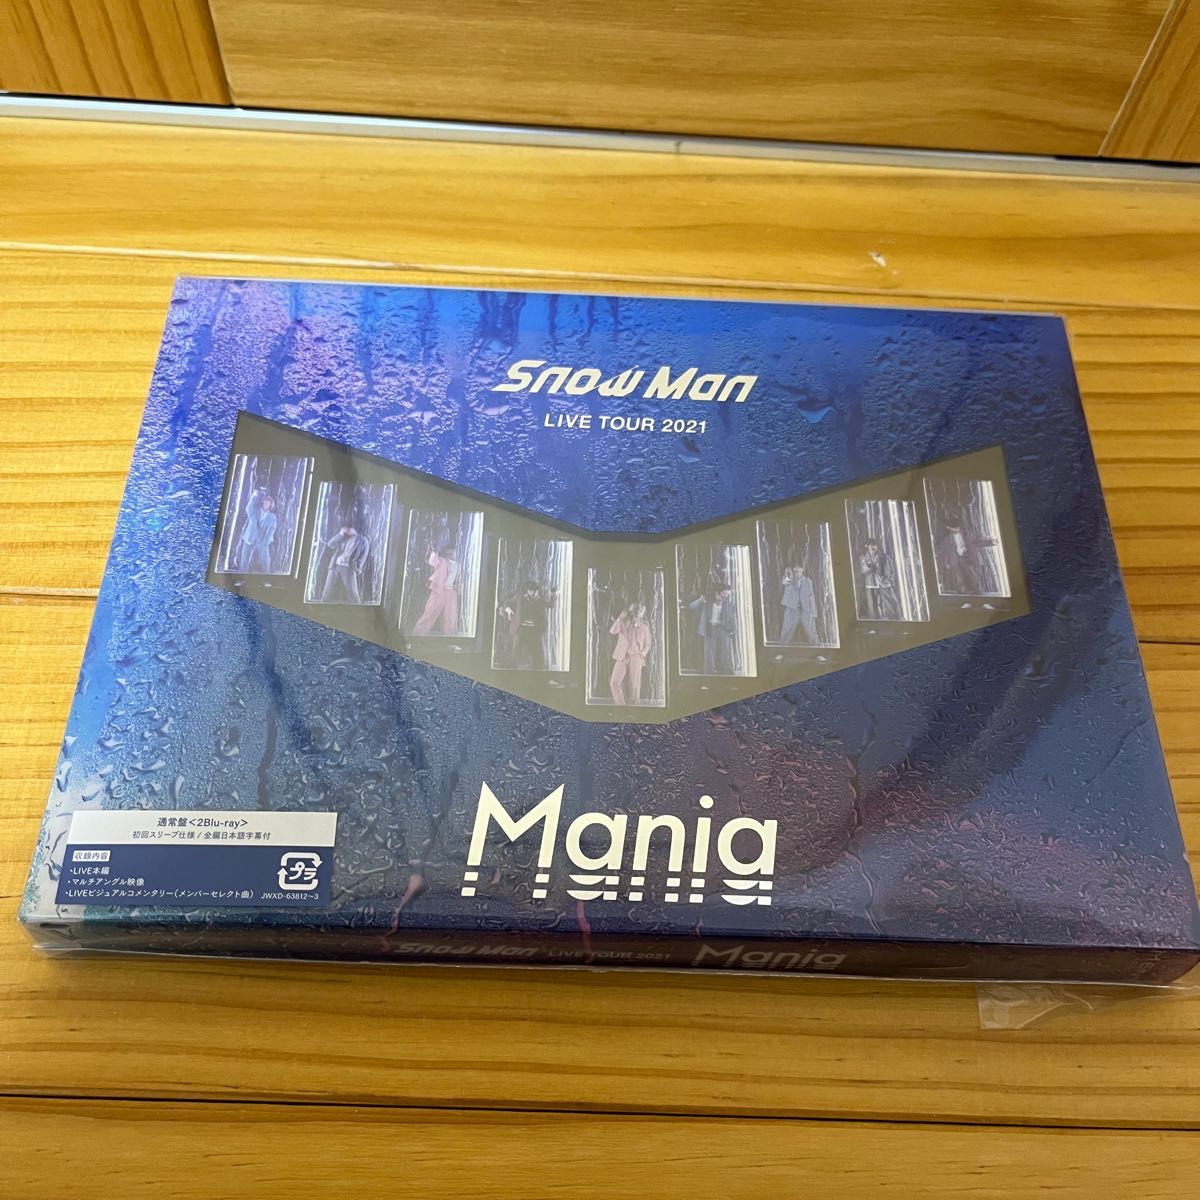 Blu-ray】Snow Man LIVE TOUR 2021 Mania (2枚組) 通常盤 初回仕様 